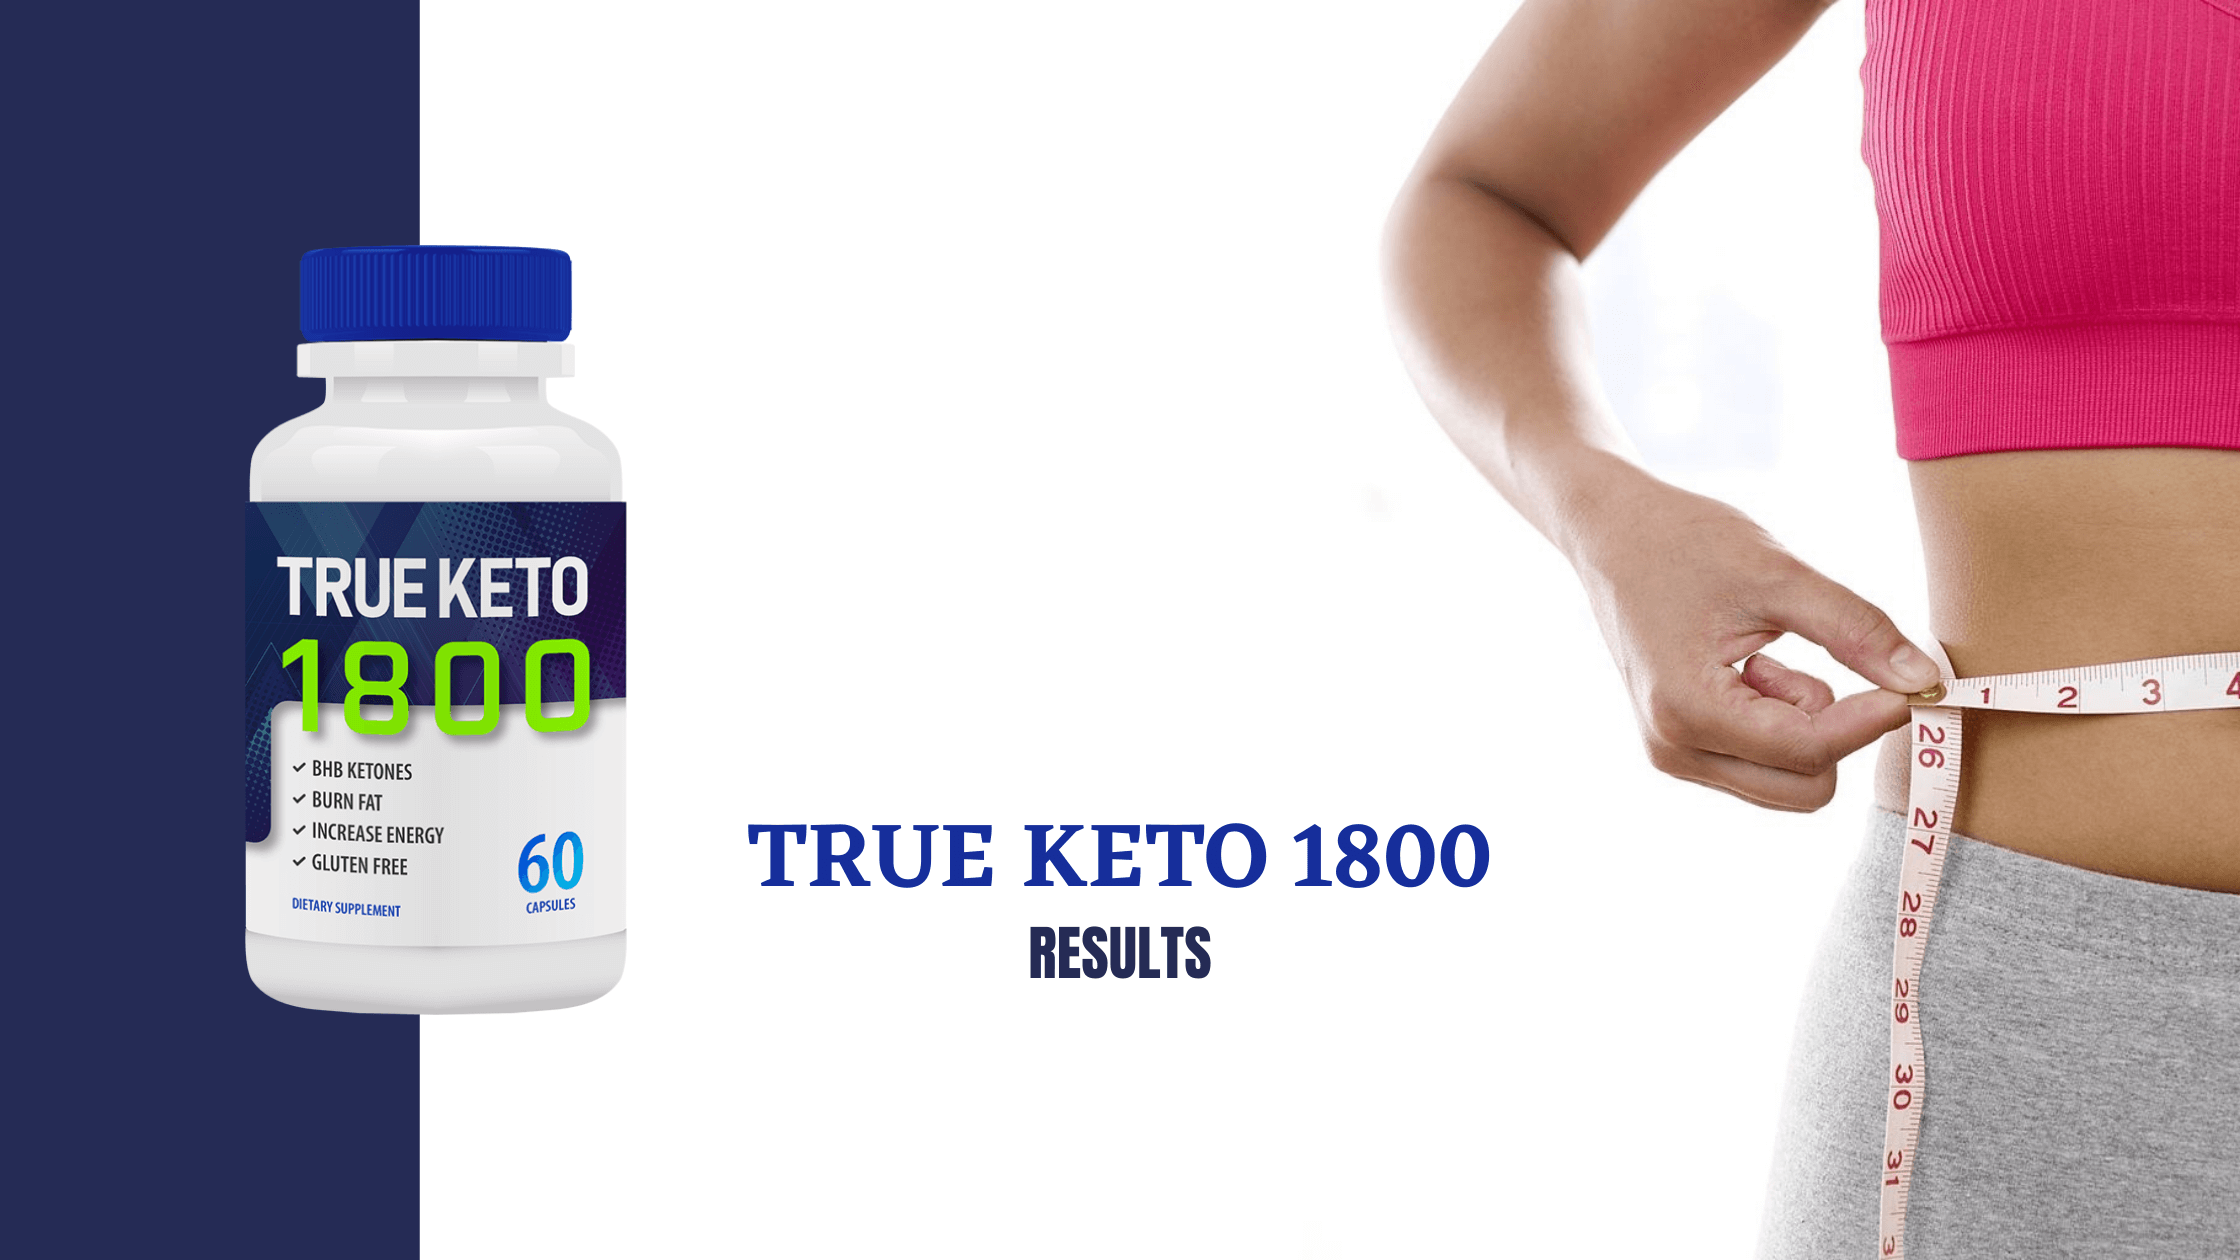 True Keto 1800 Results